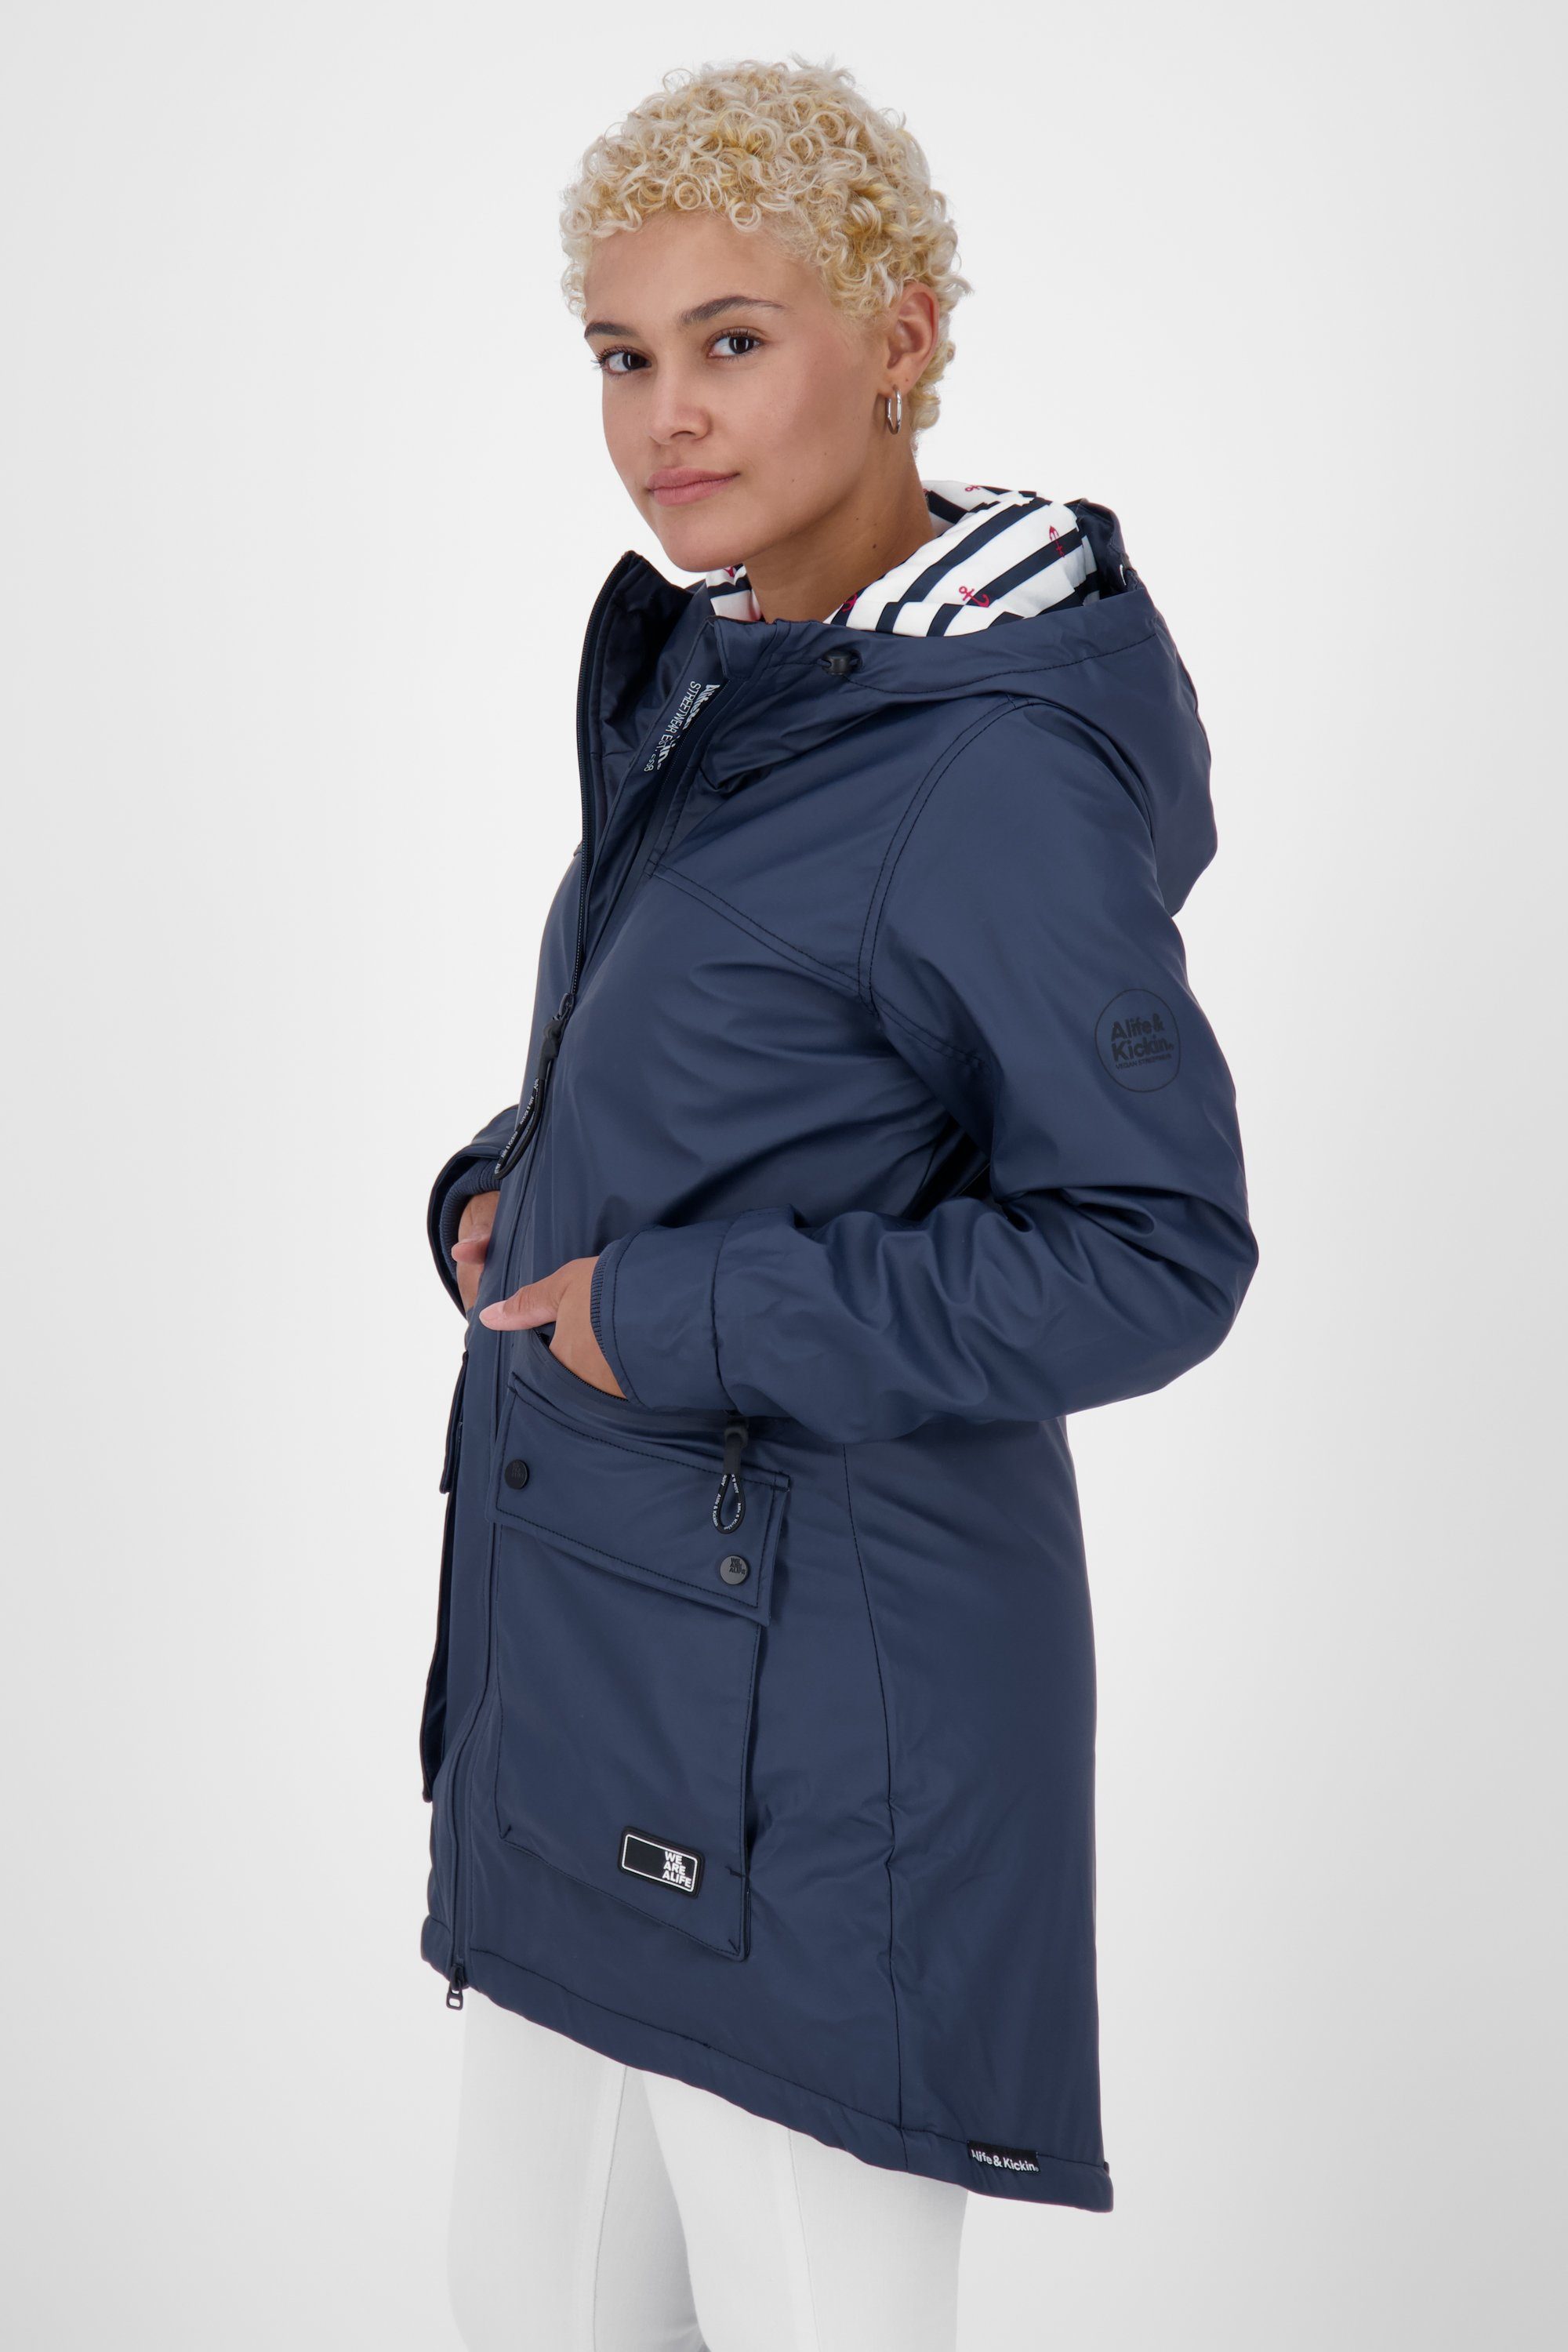 Alife & Rainstyle AudreyAK Übergangsjacke Damen Kickin Coat Langjacke, Langjacke marine A